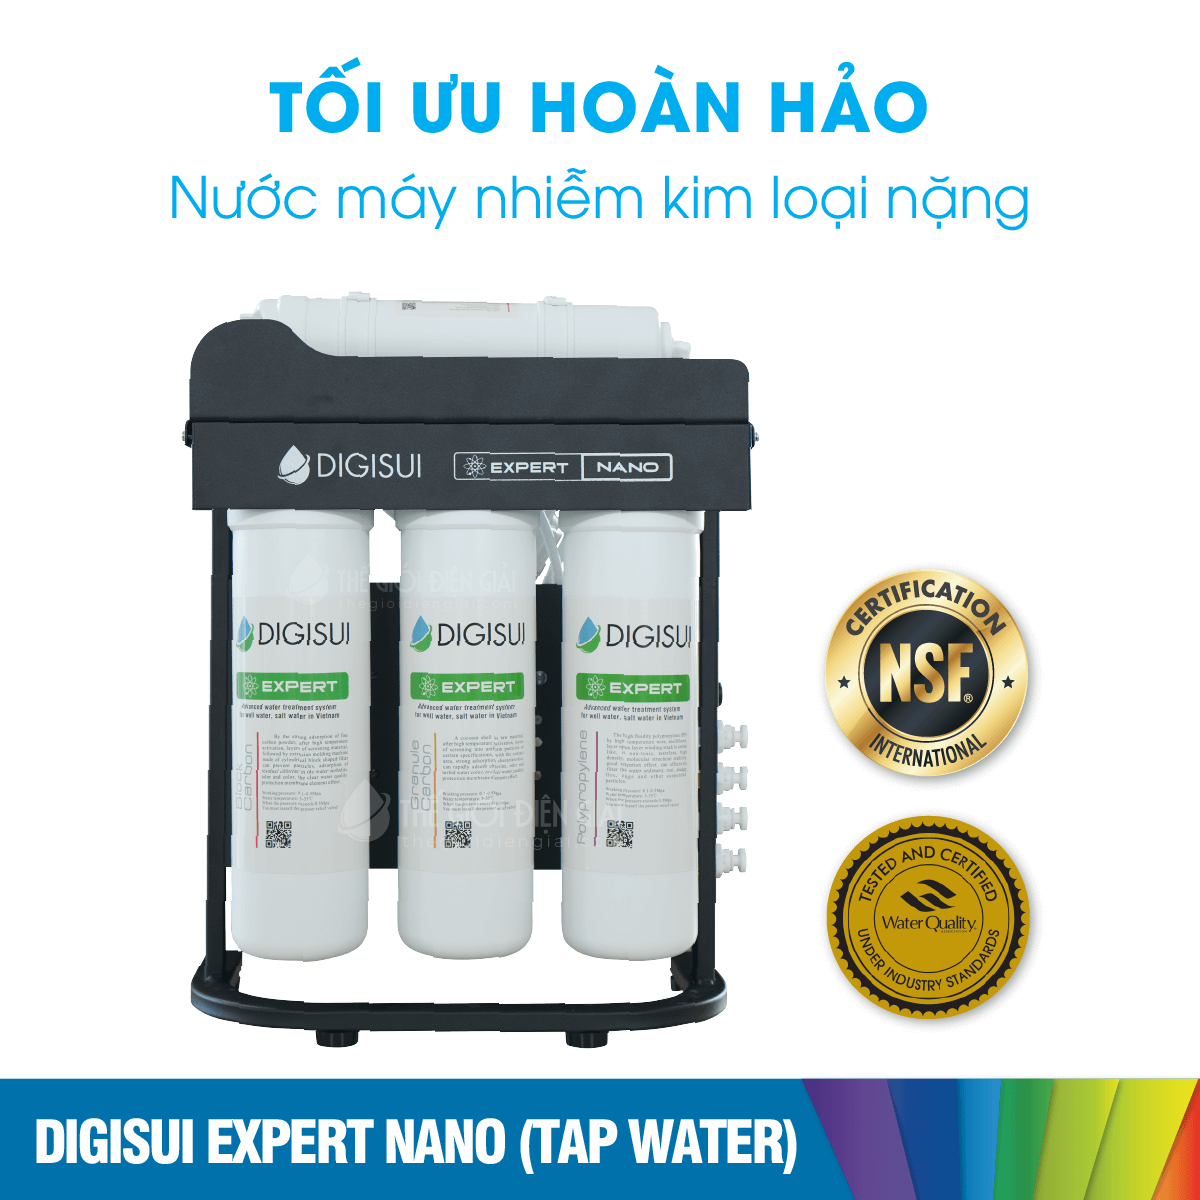 Chứng nhận của Digisui Expert Nano Tap Water 